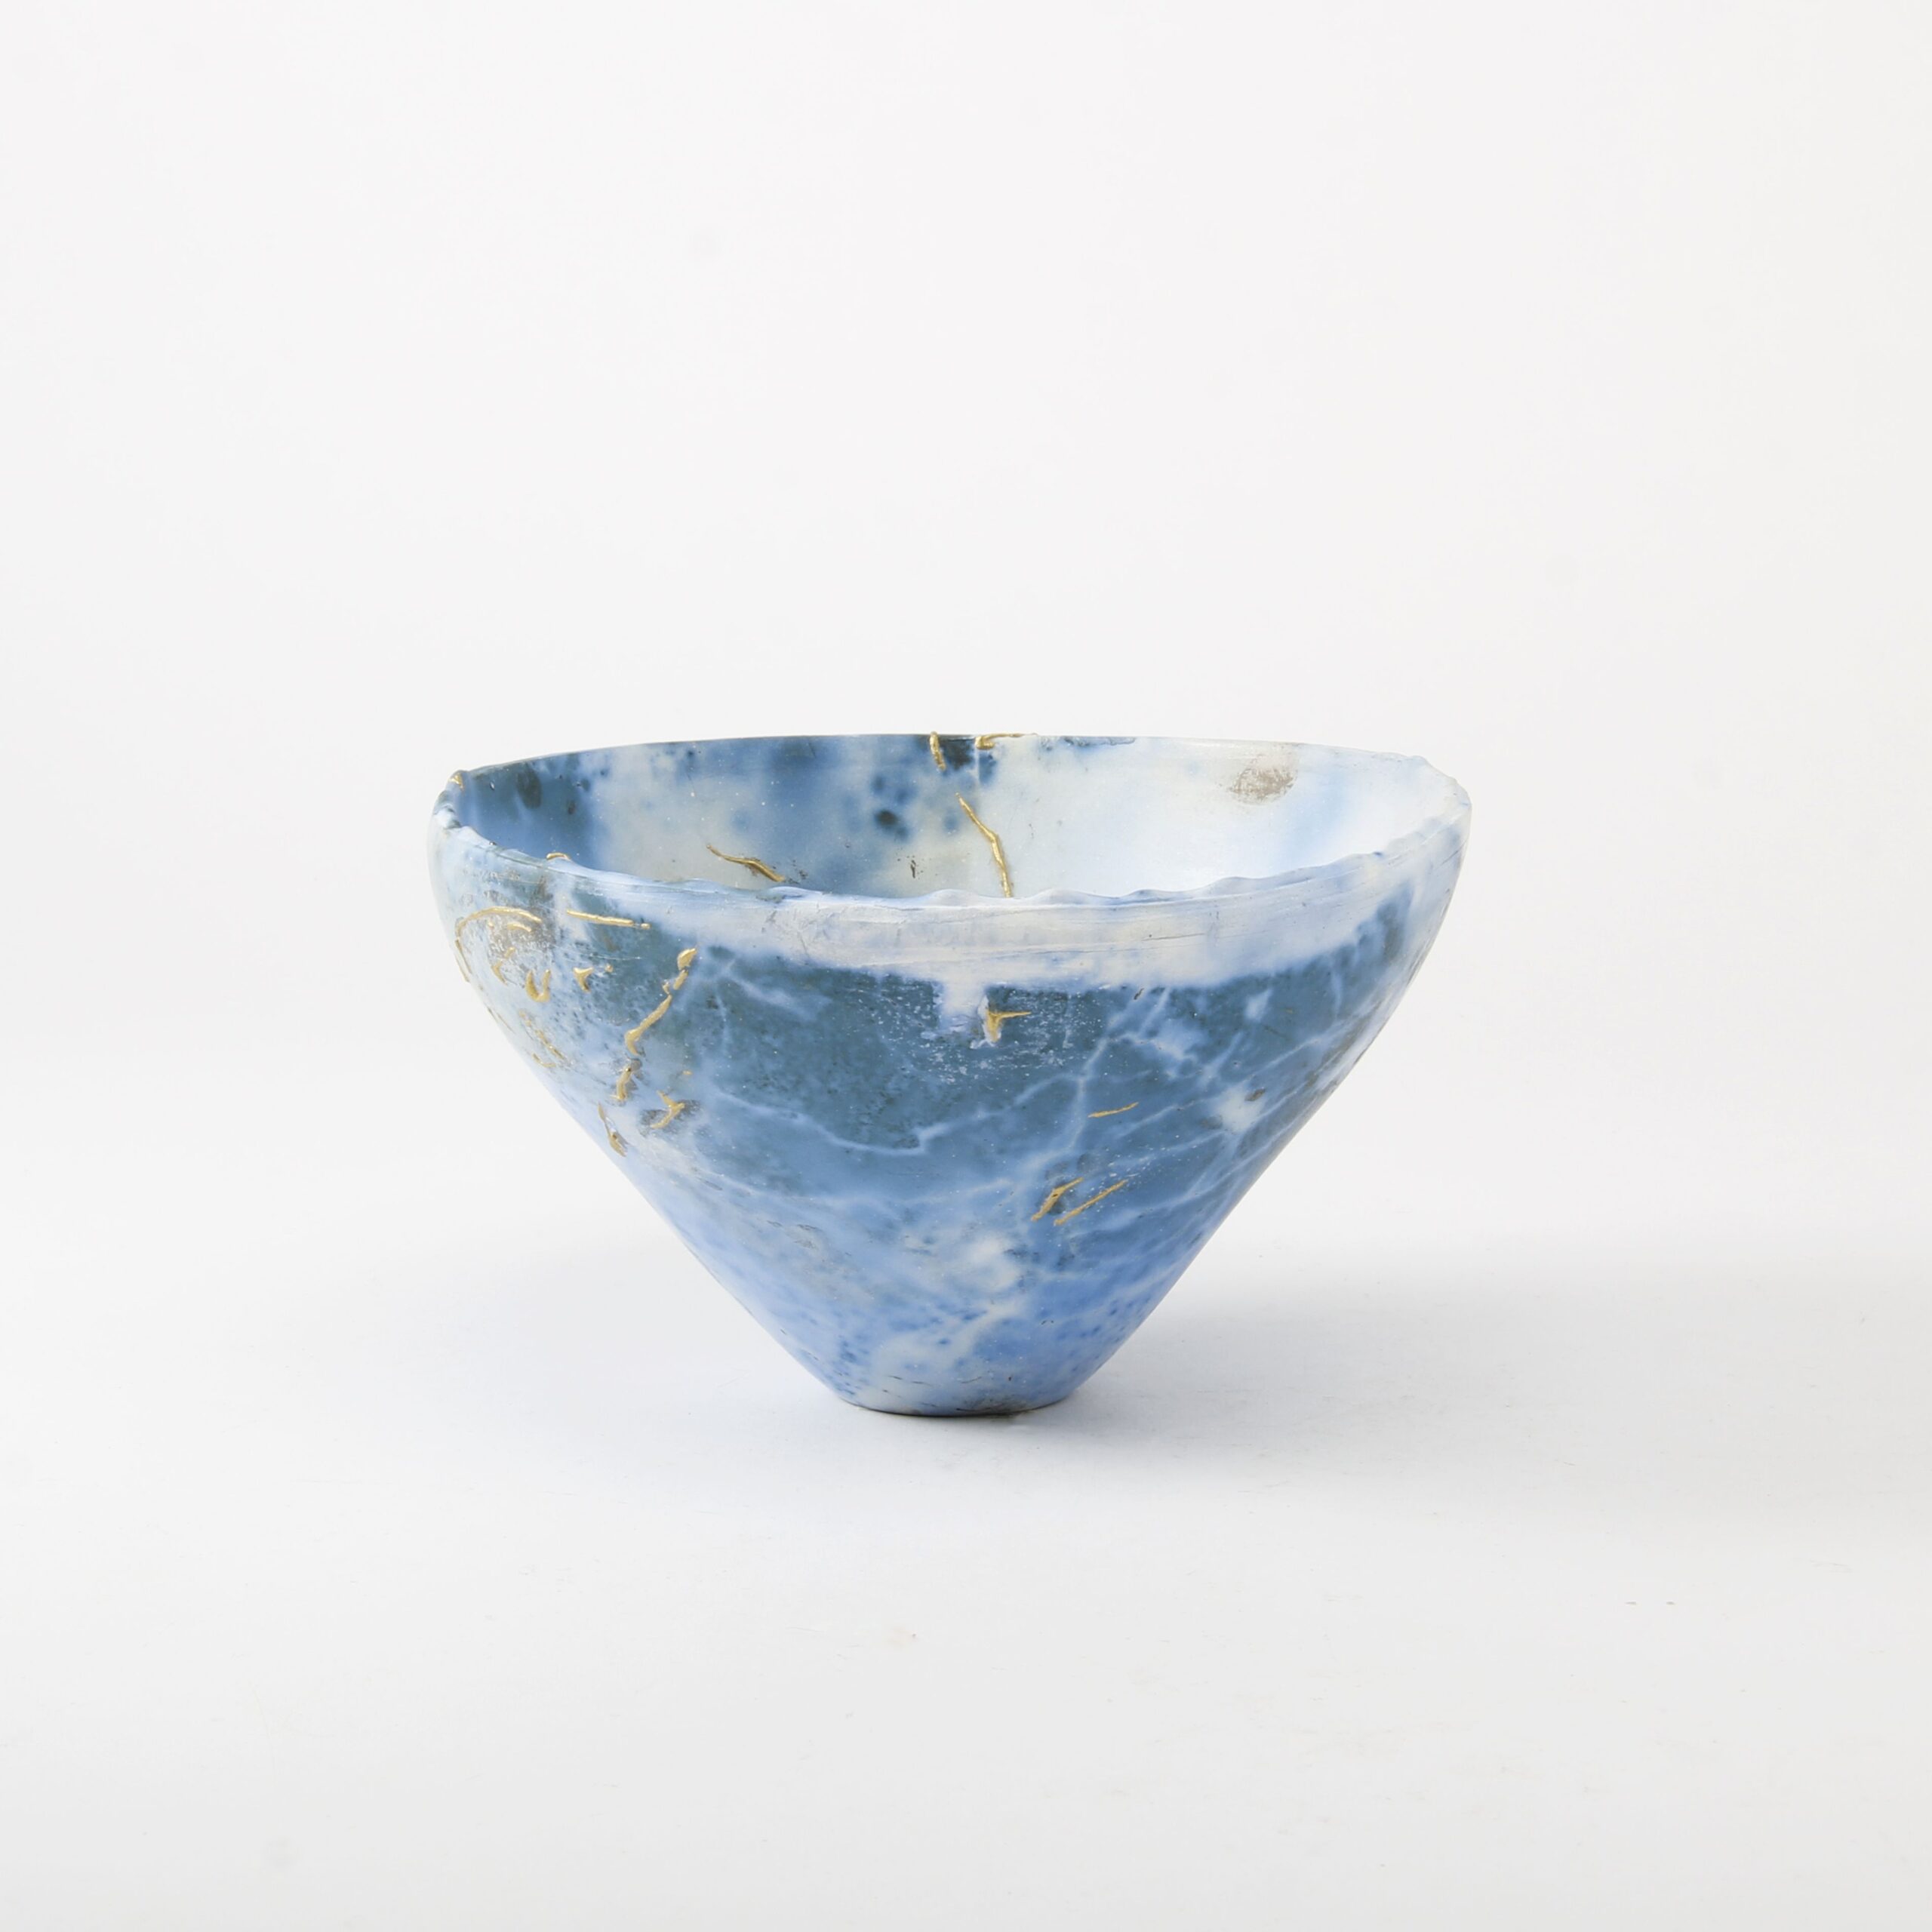 Alison Brannen: Medium Bowl Product Image 1 of 6